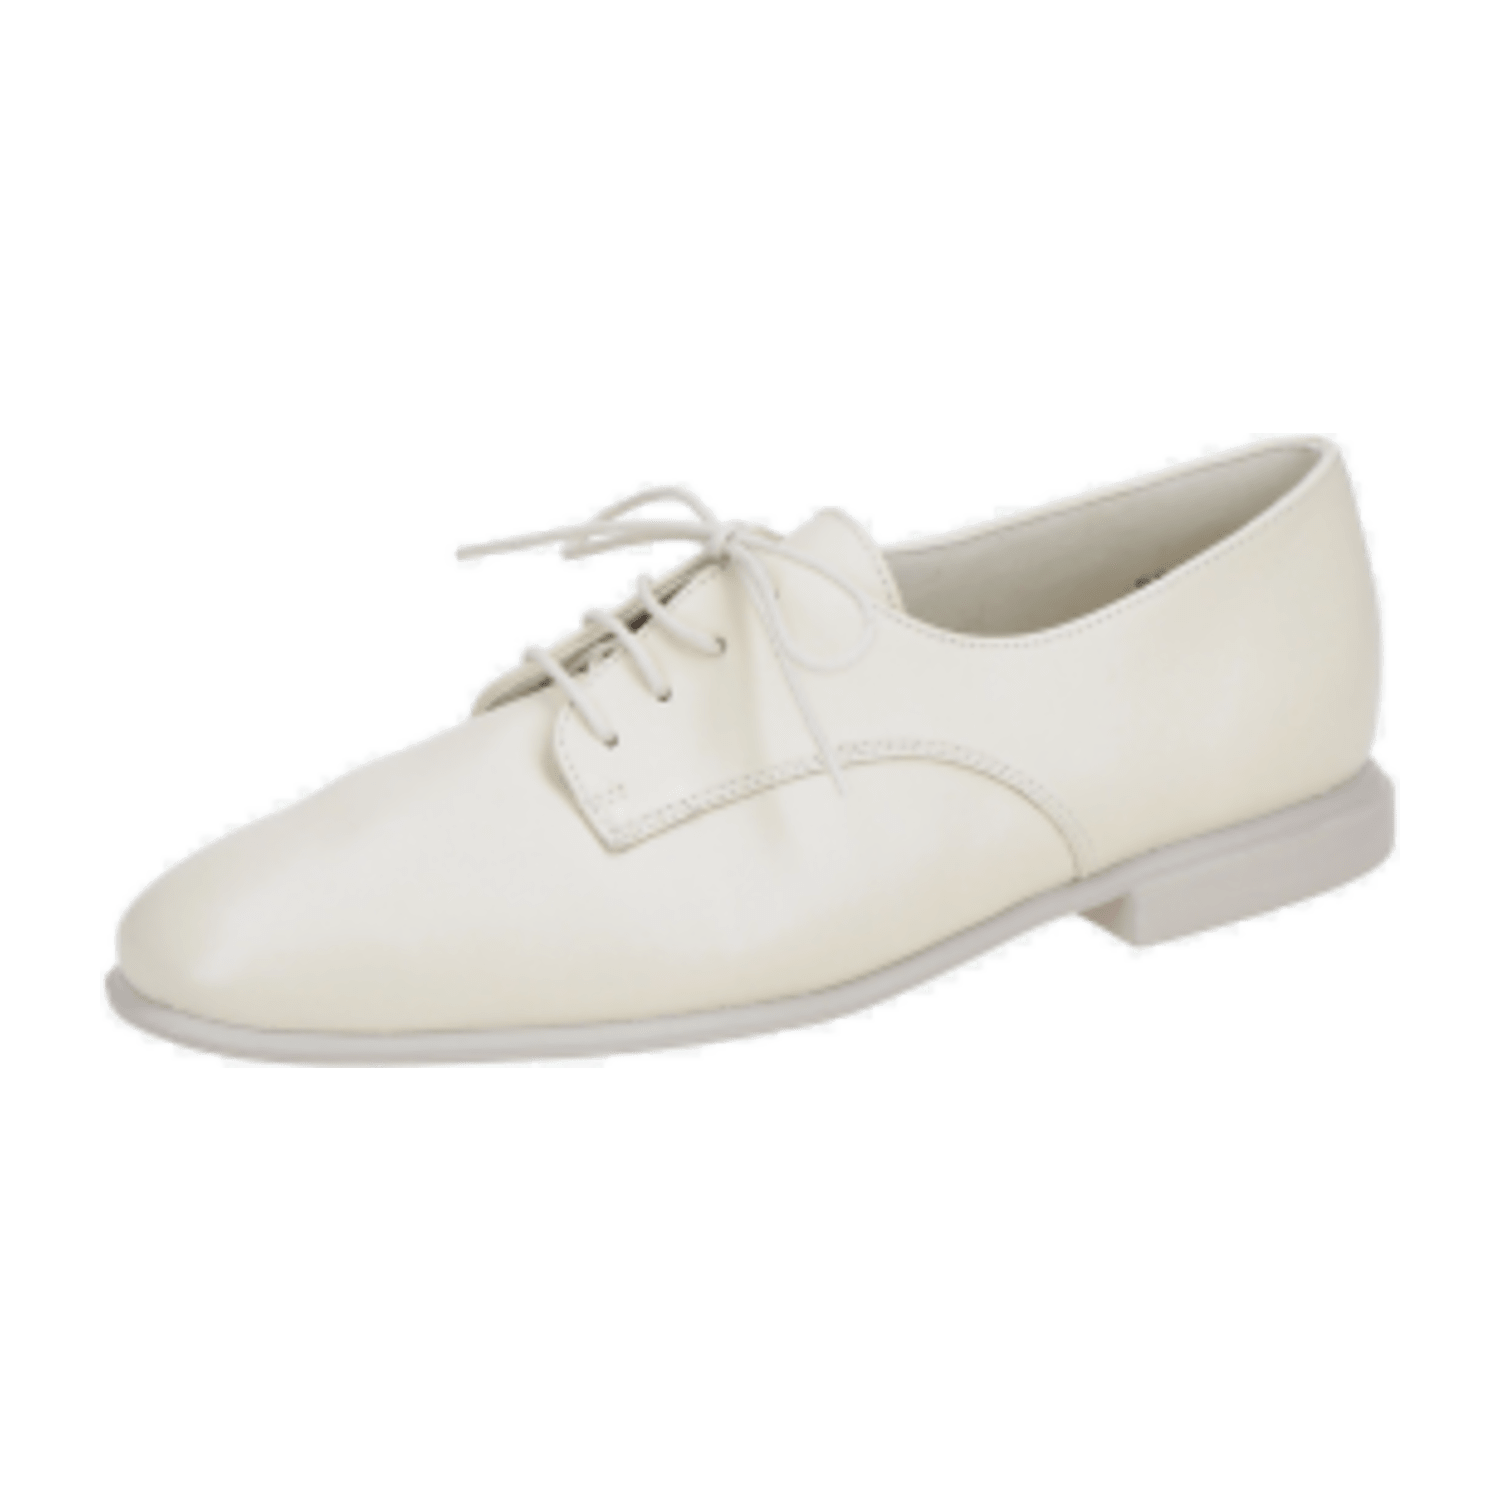 Paul Green Schuhe beige cream Schnürer Nappa 2994